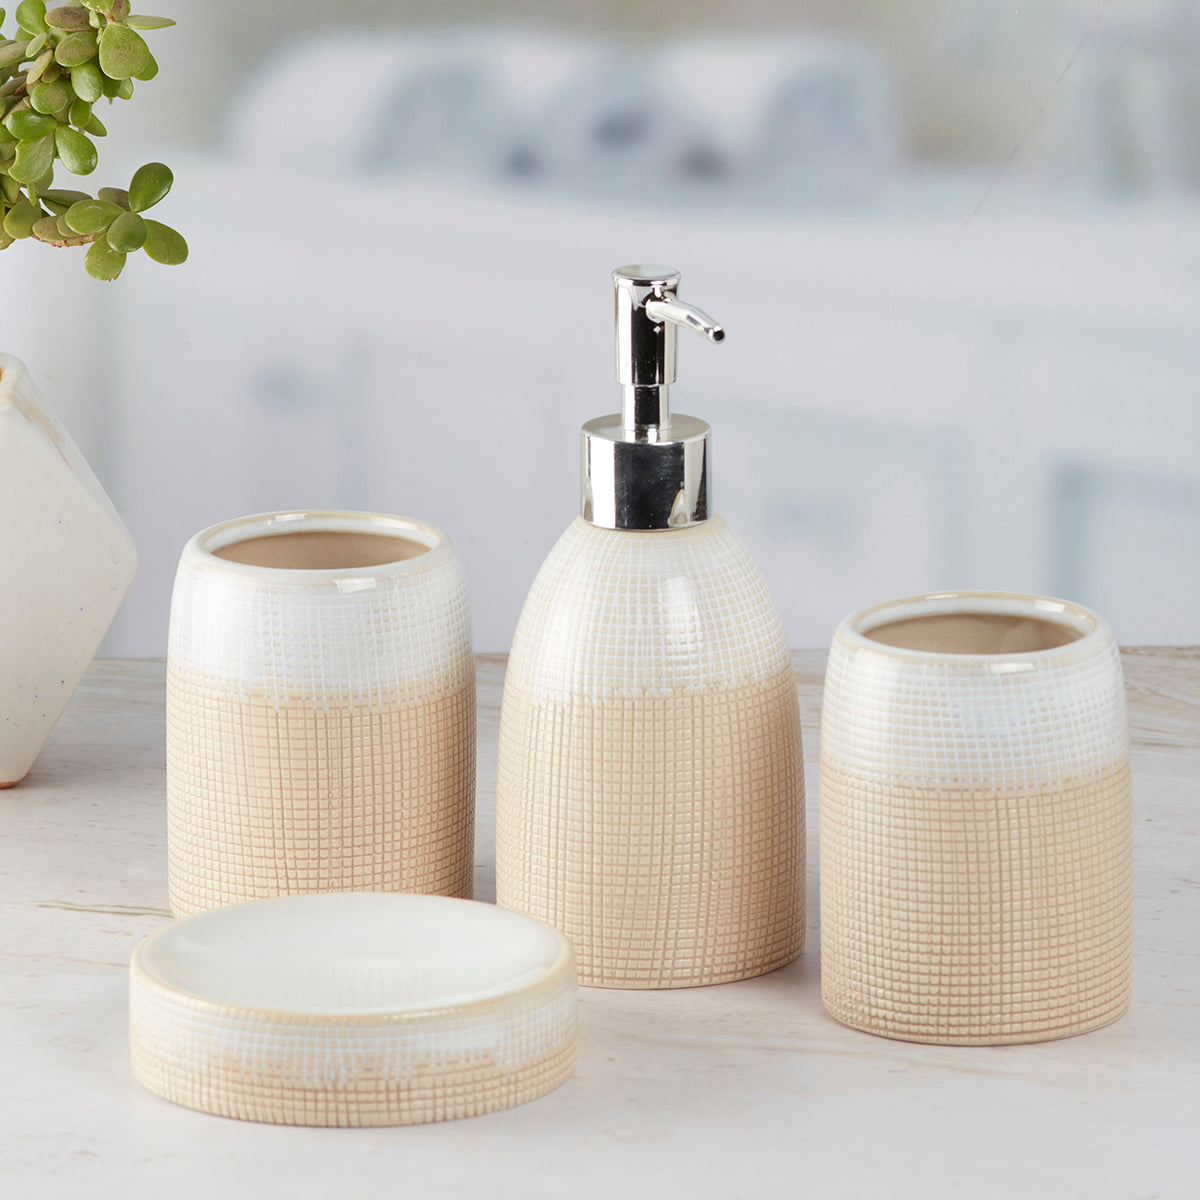 Ceramic Bathroom Accessories Set of 4 Bath Set with Soap Dispenser (8232)